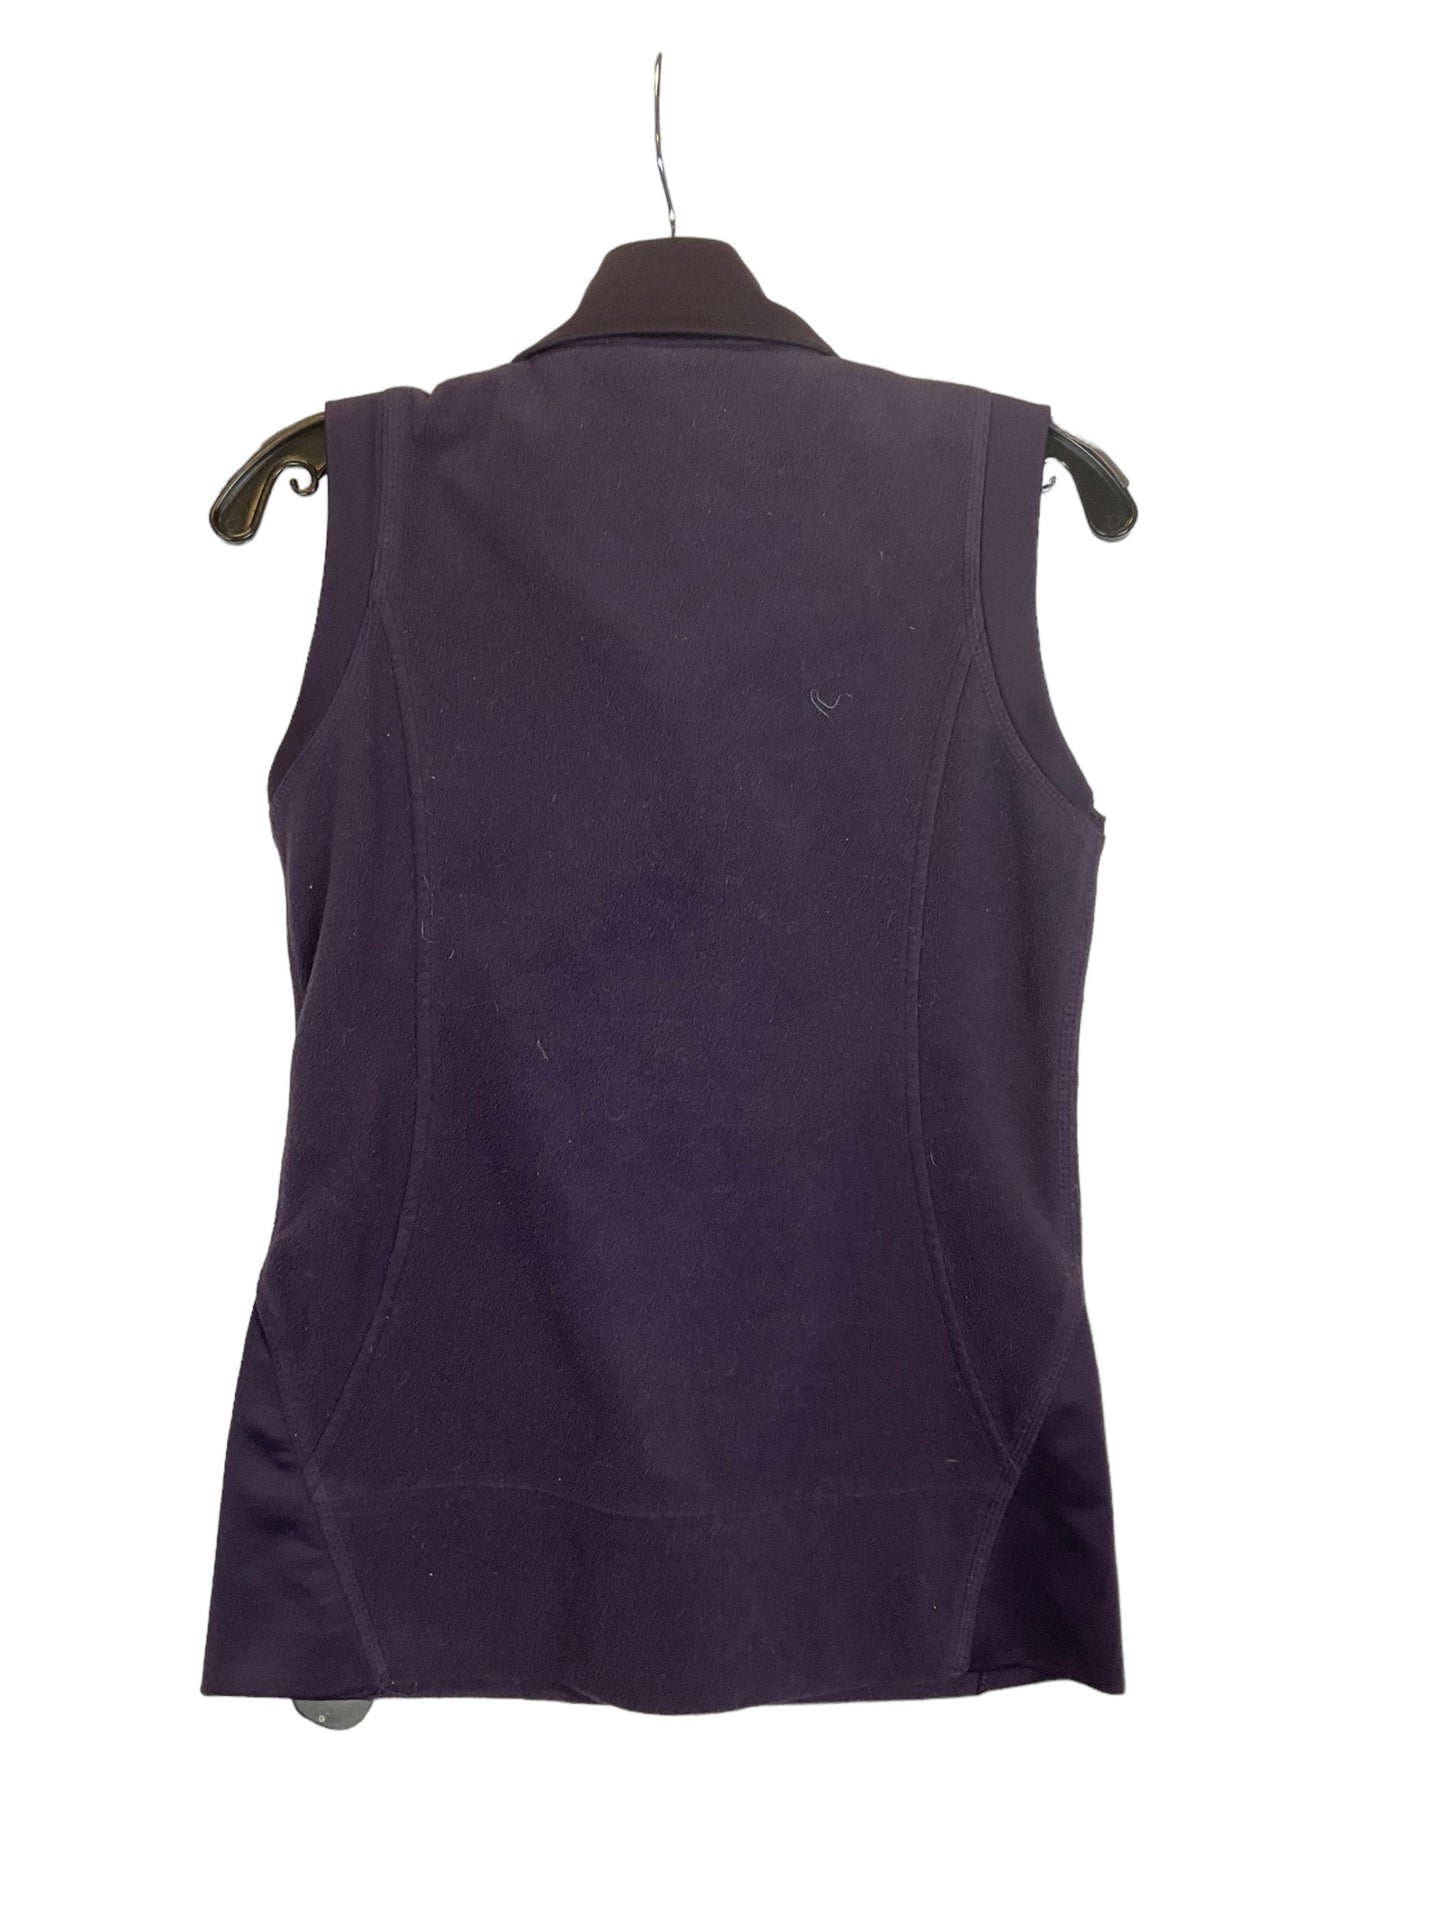 Vest Designer By Columbia  Size: S